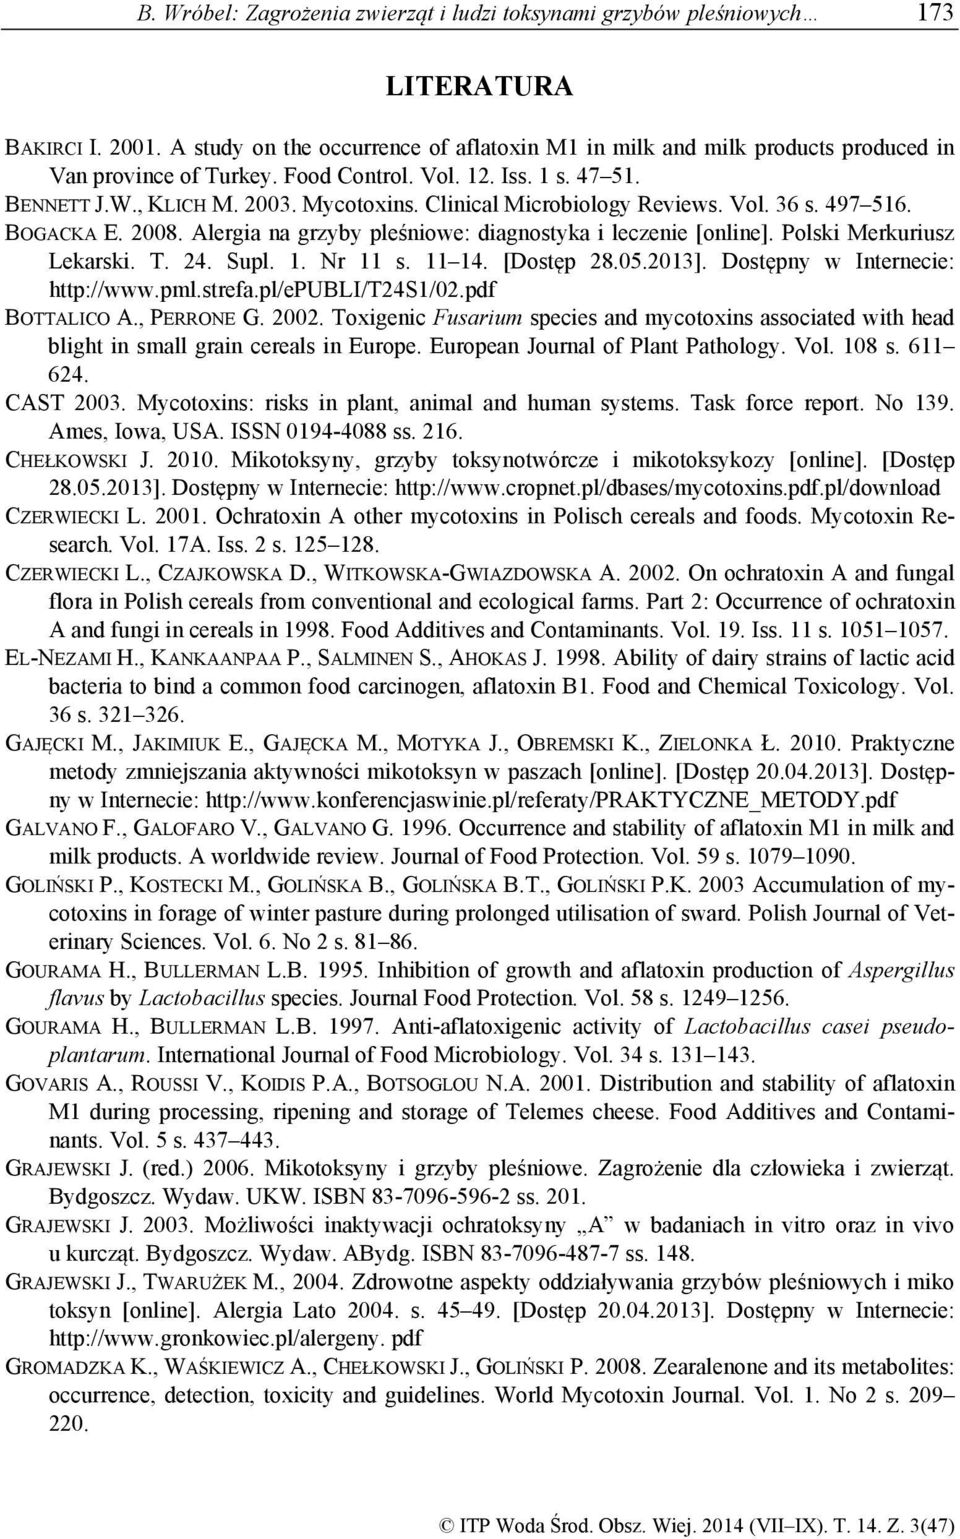 Clinical Microbiology Reviews. Vol. 36 s. 497 516. BOGACKA E. 2008. Alergia na grzyby pleśniowe: diagnostyka i leczenie [online]. Polski Merkuriusz Lekarski. T. 24. Supl. 1. Nr 11 s. 11 14.